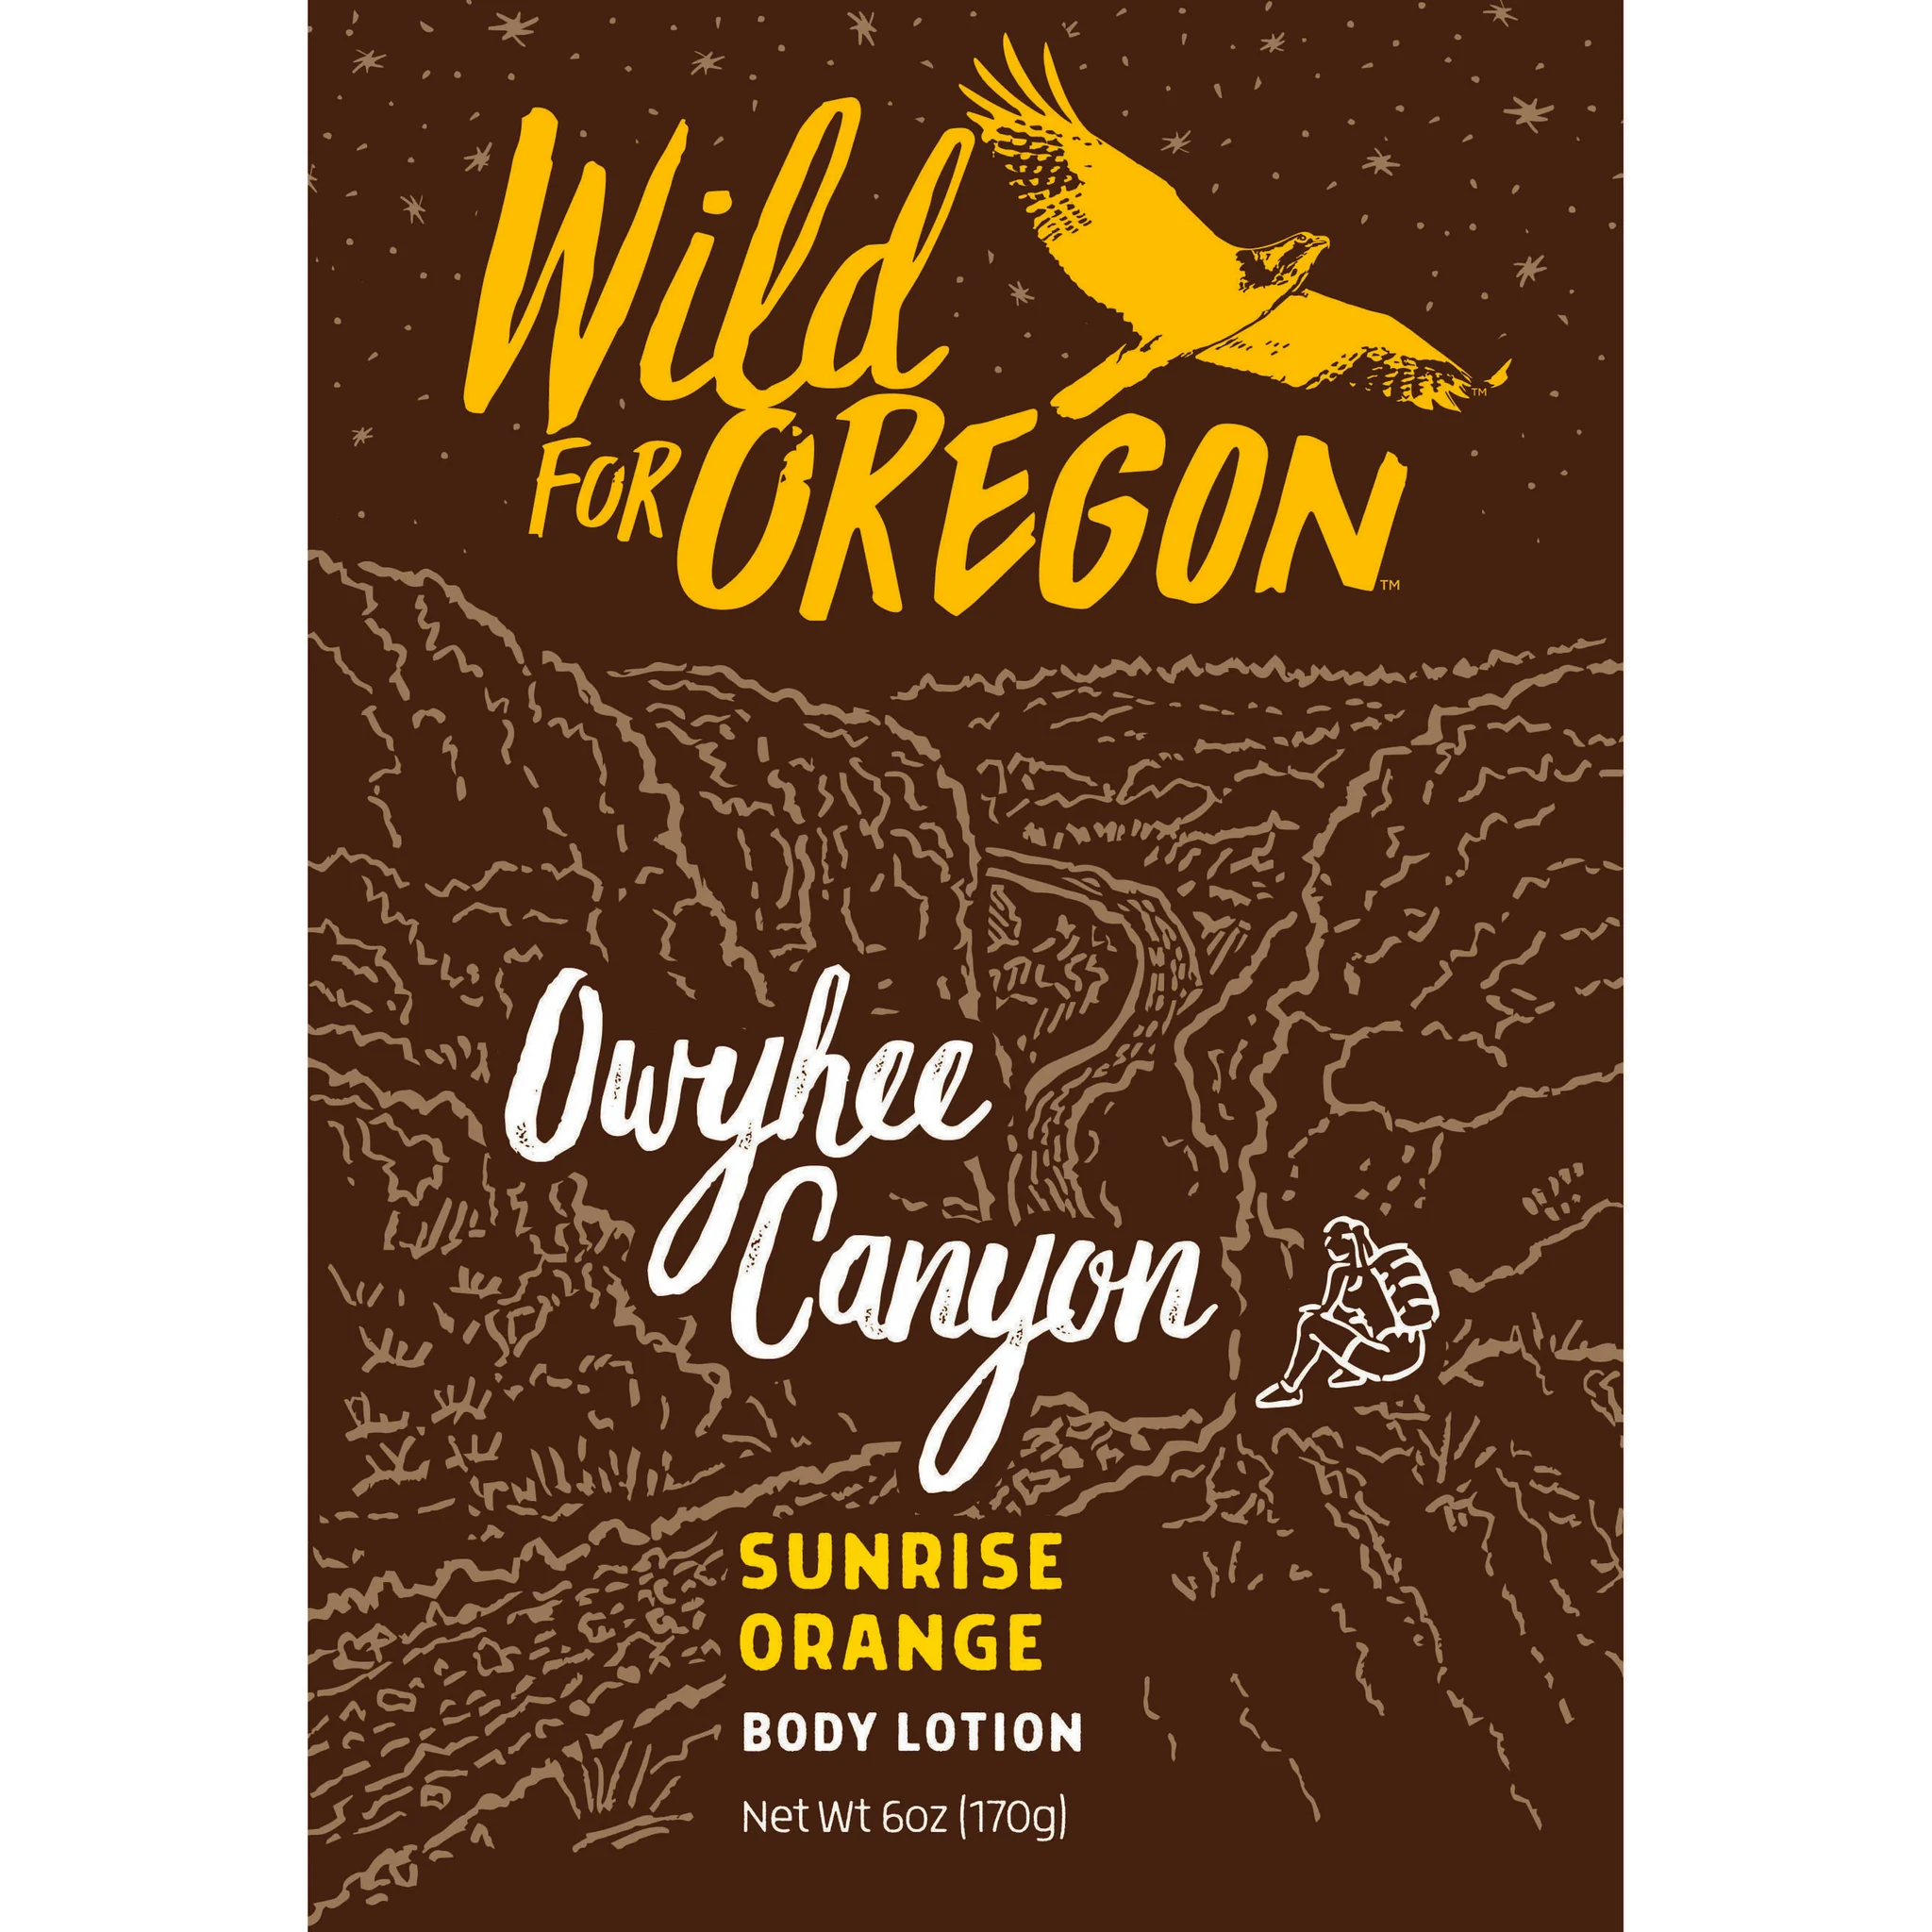 Body Lotion - Wild for Oregon